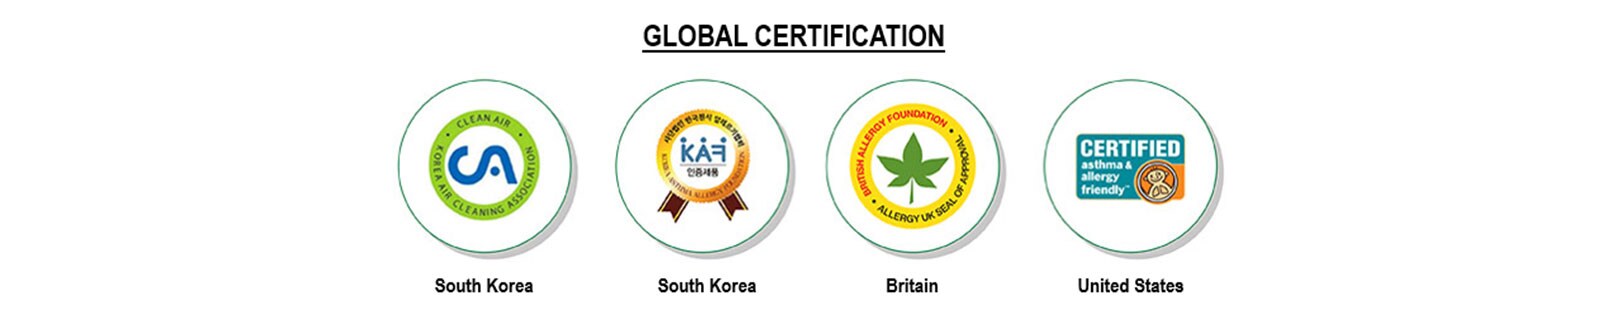 Global_Certification